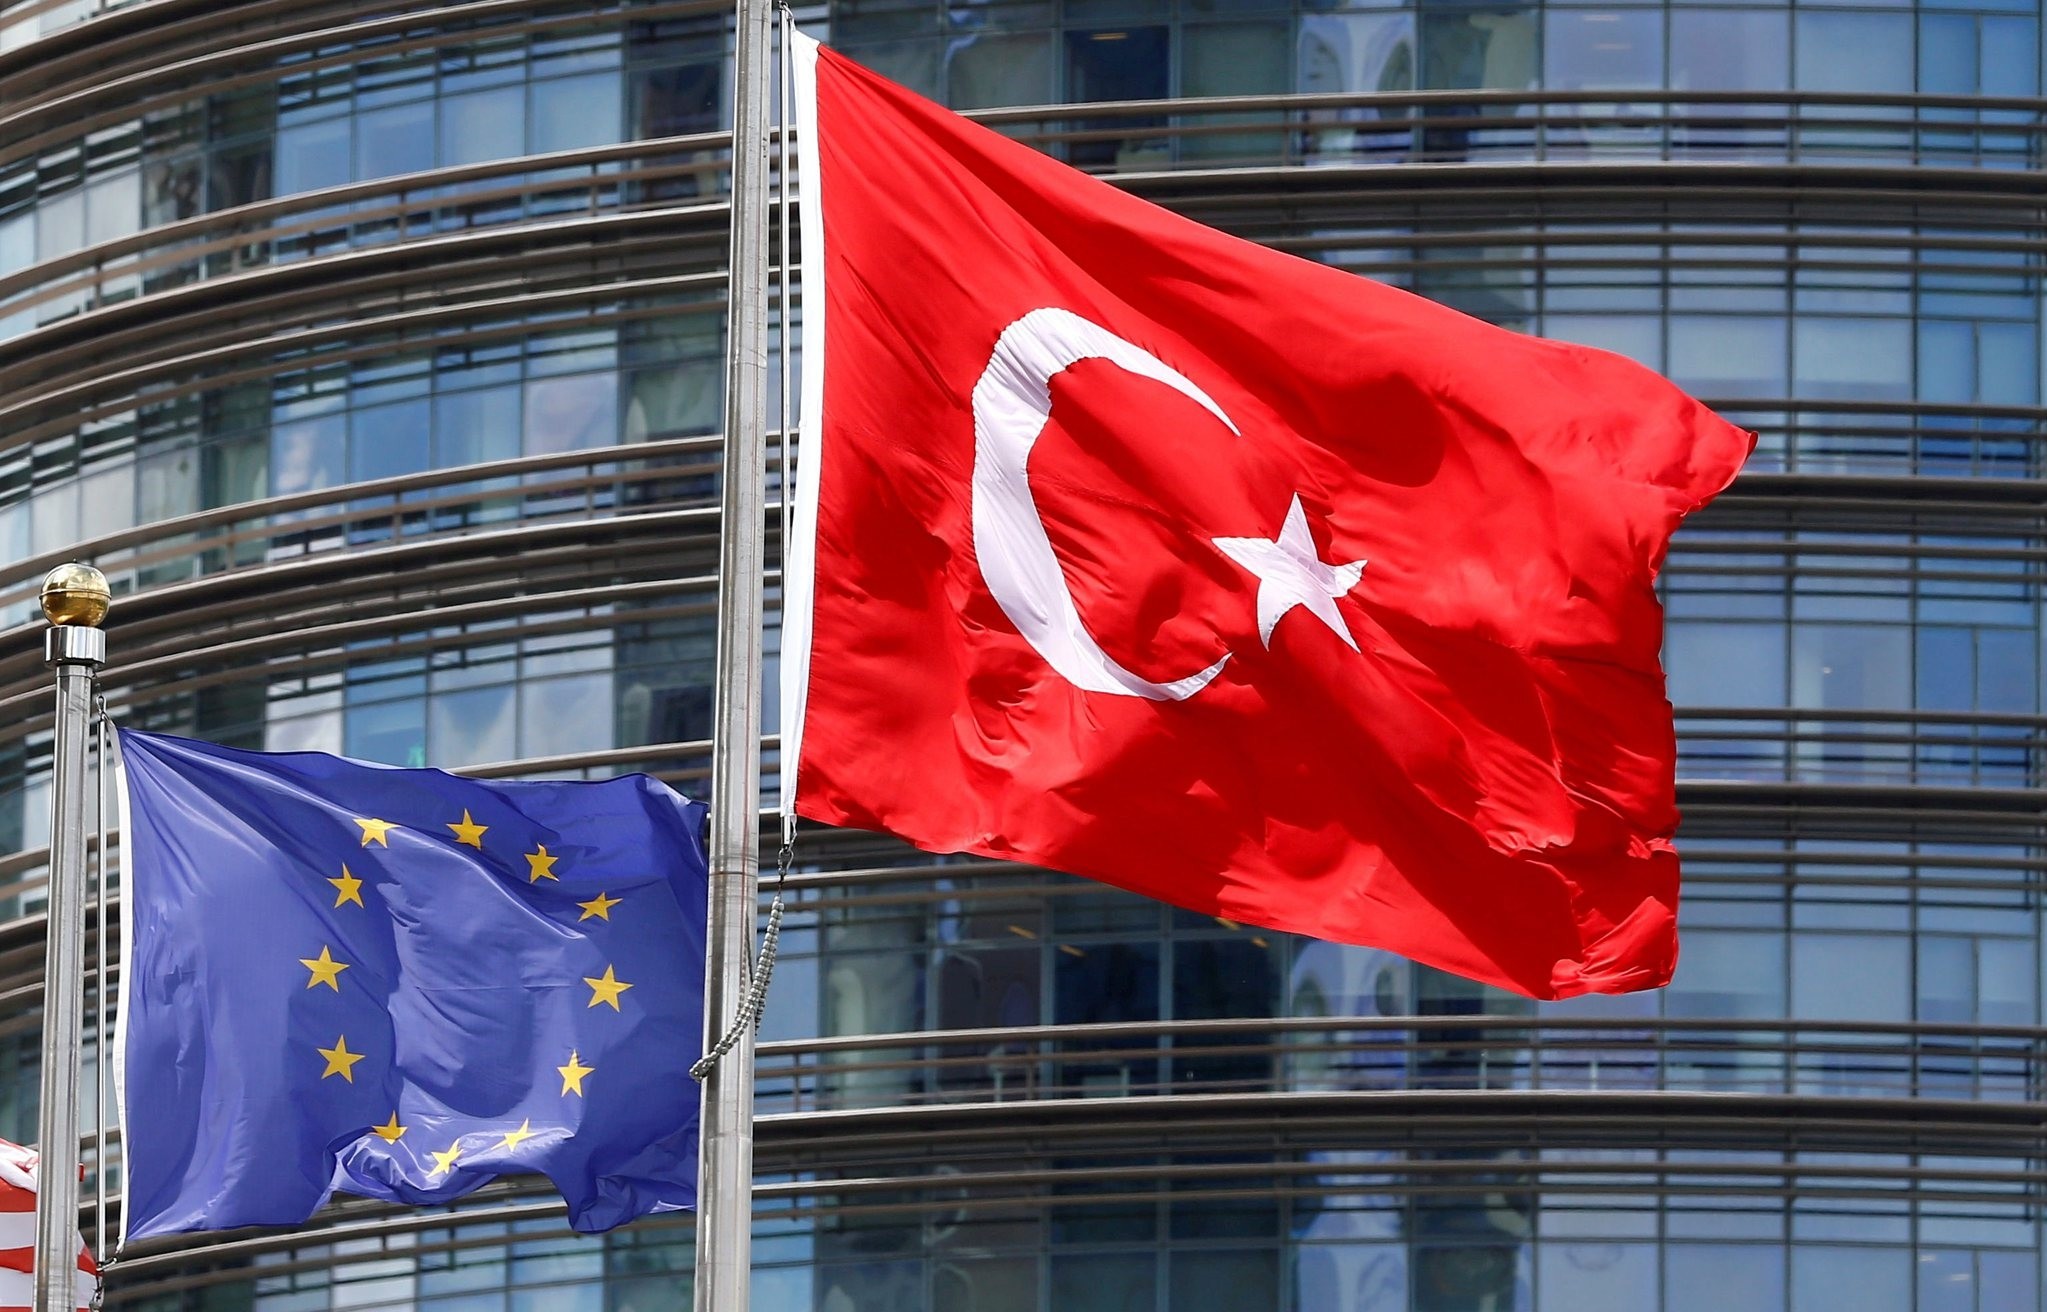 Romania President Appeals to the European Union for Turkey